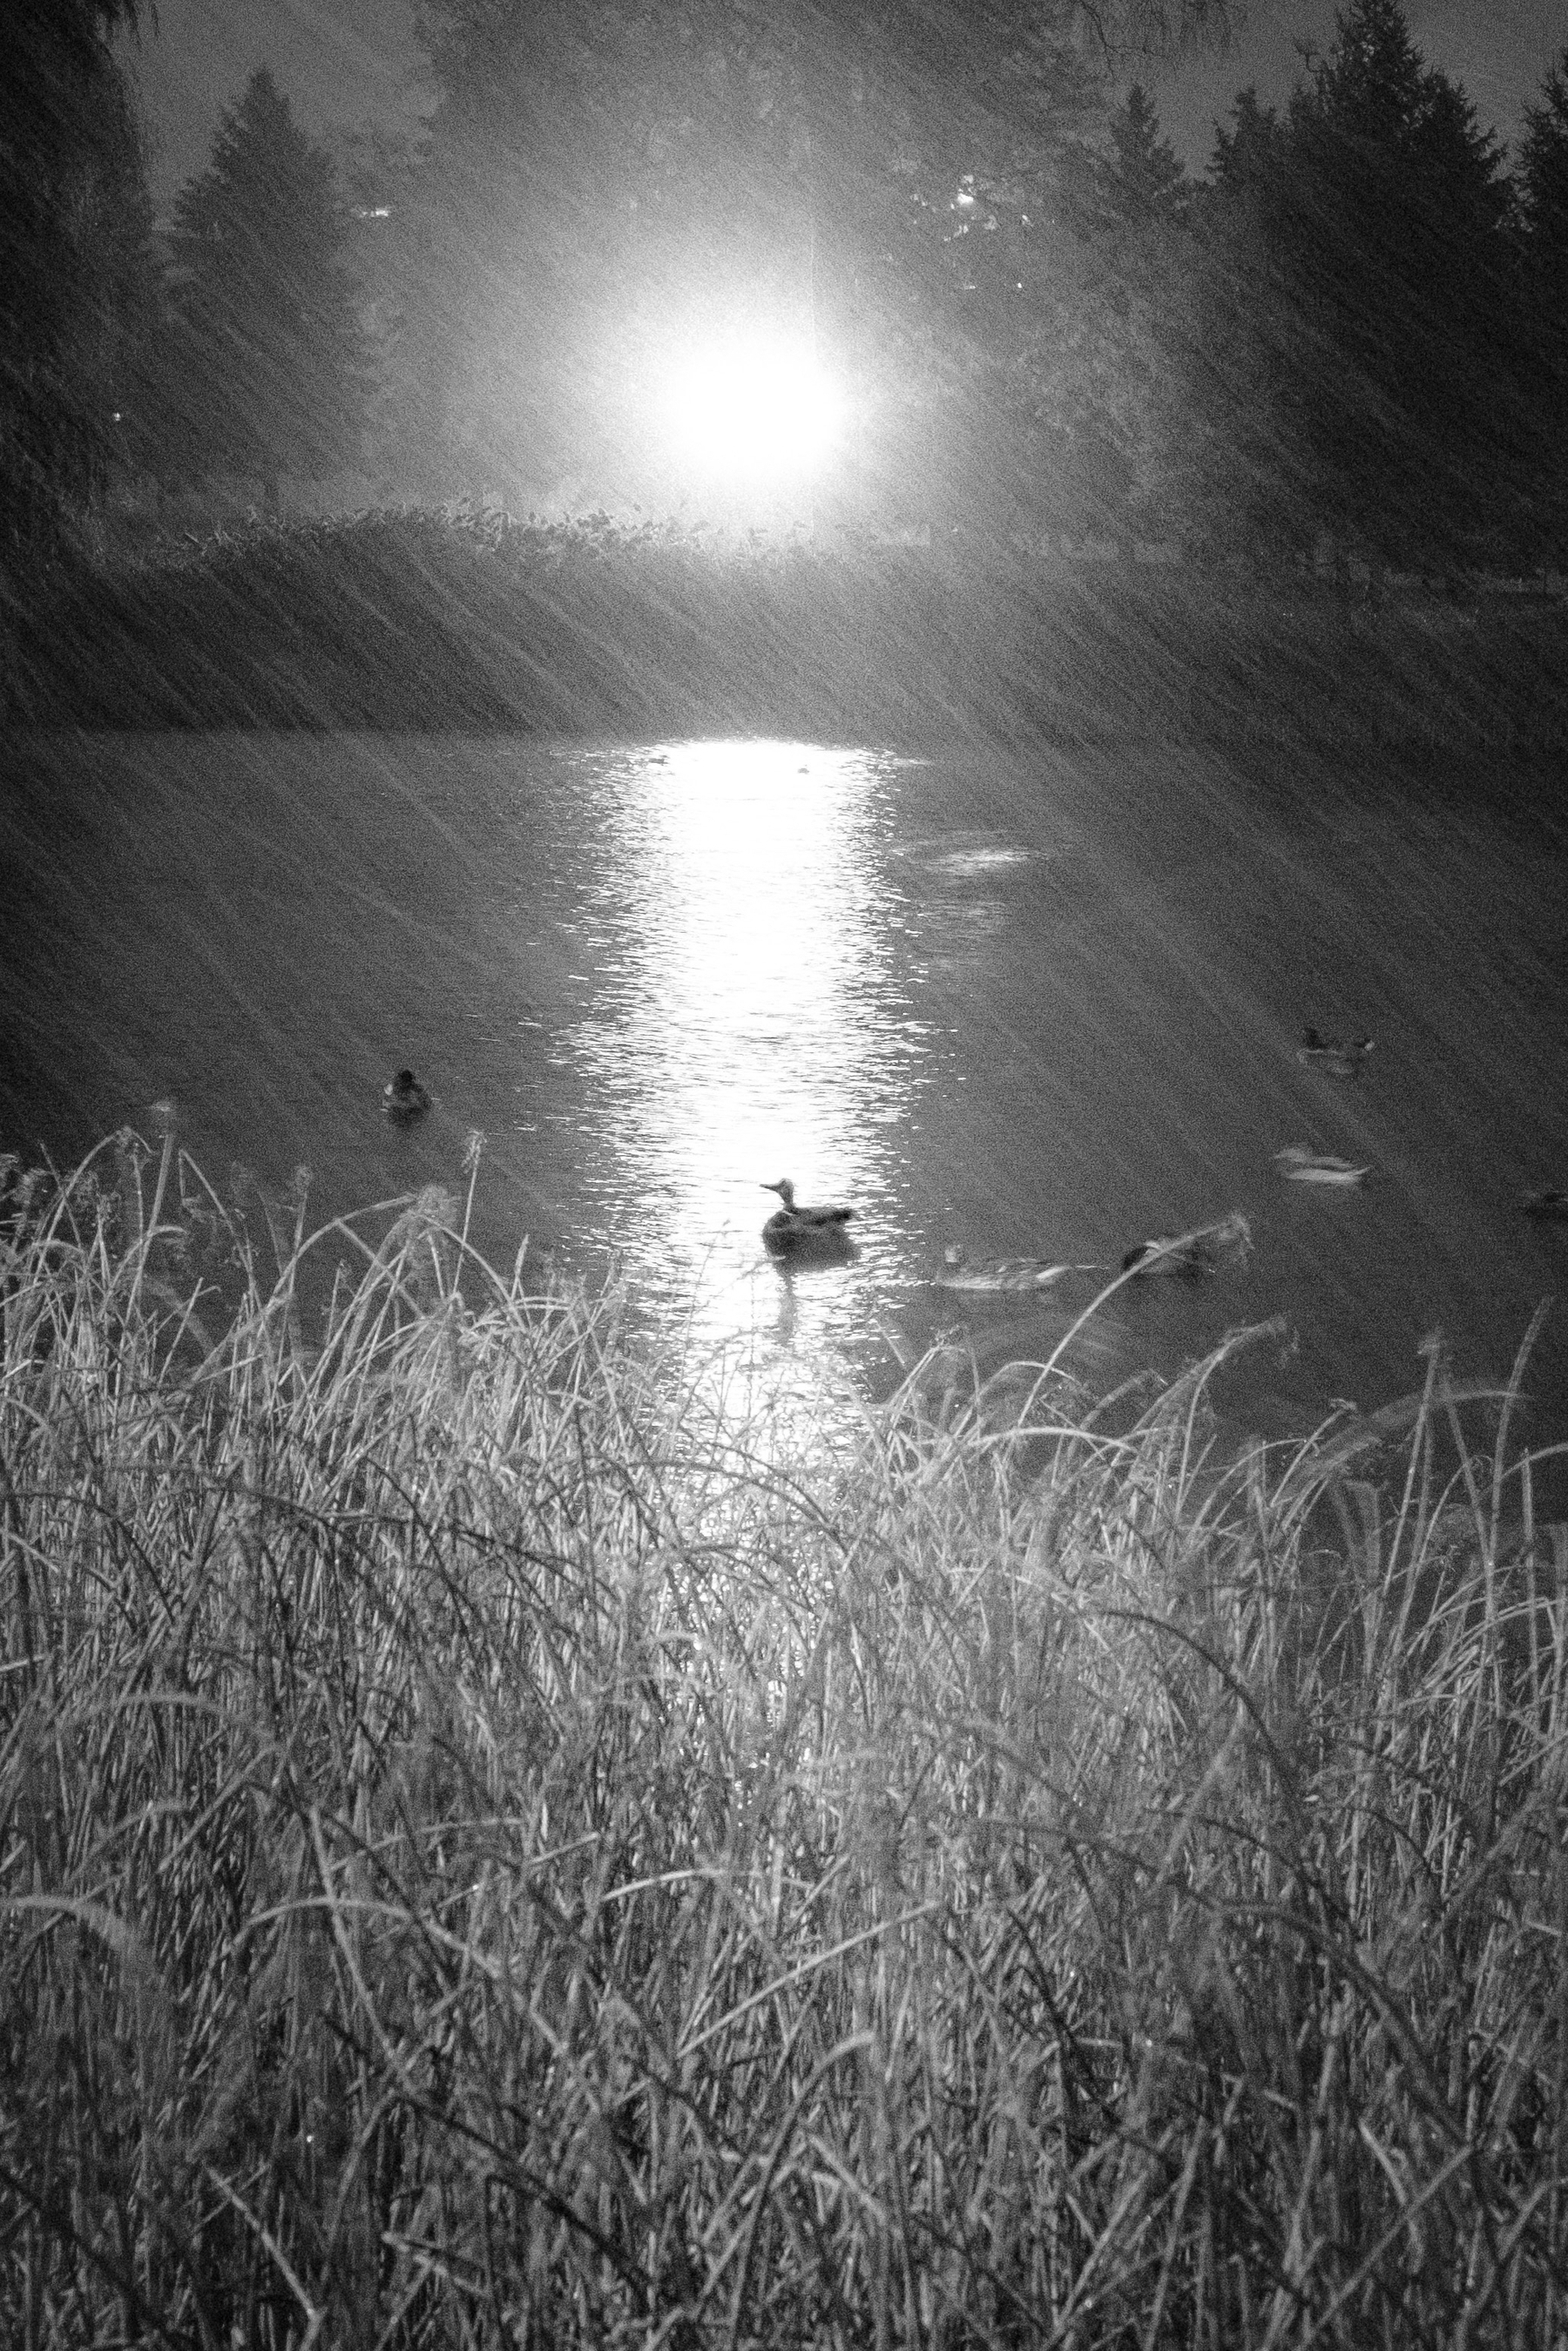 A scruffy, blurry, grainy photo of a duck in rain.